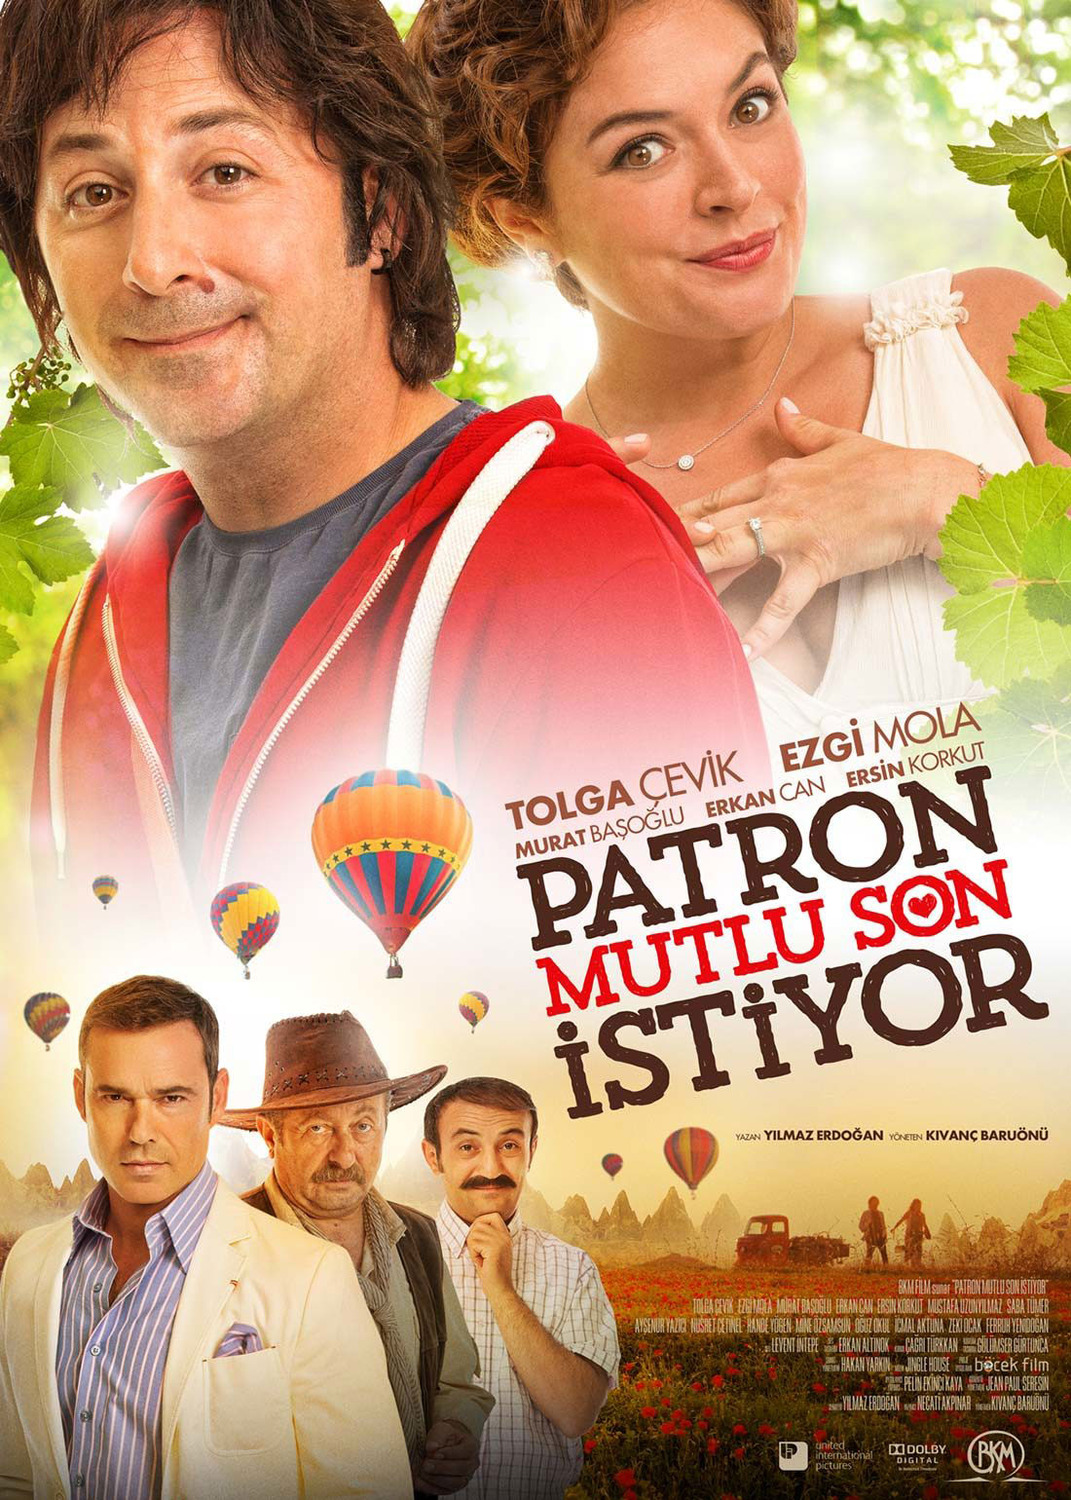 Extra Large Movie Poster Image for Patron Mutlu Son Istiyor (#1 of 2)